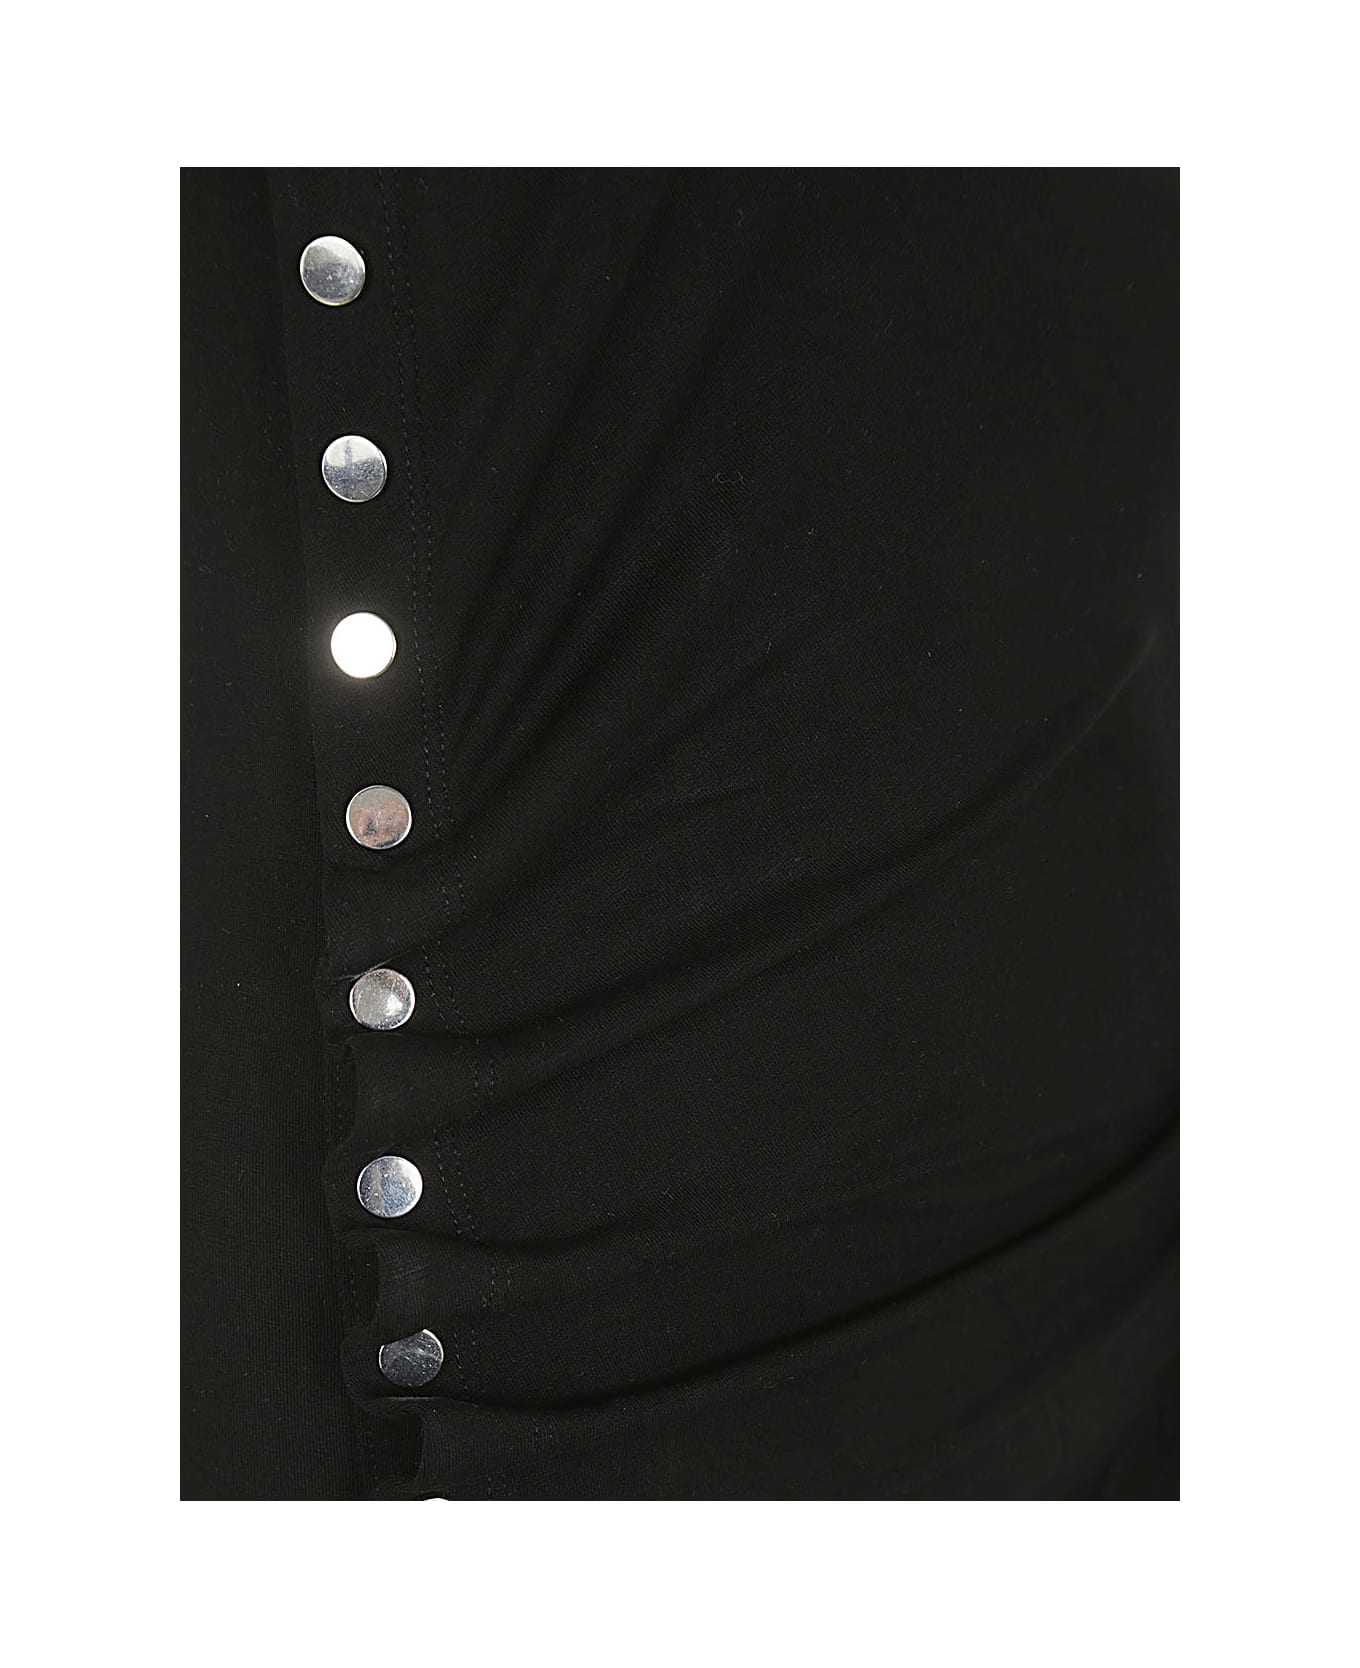 Paco Rabanne Light Jersey Dress - Black